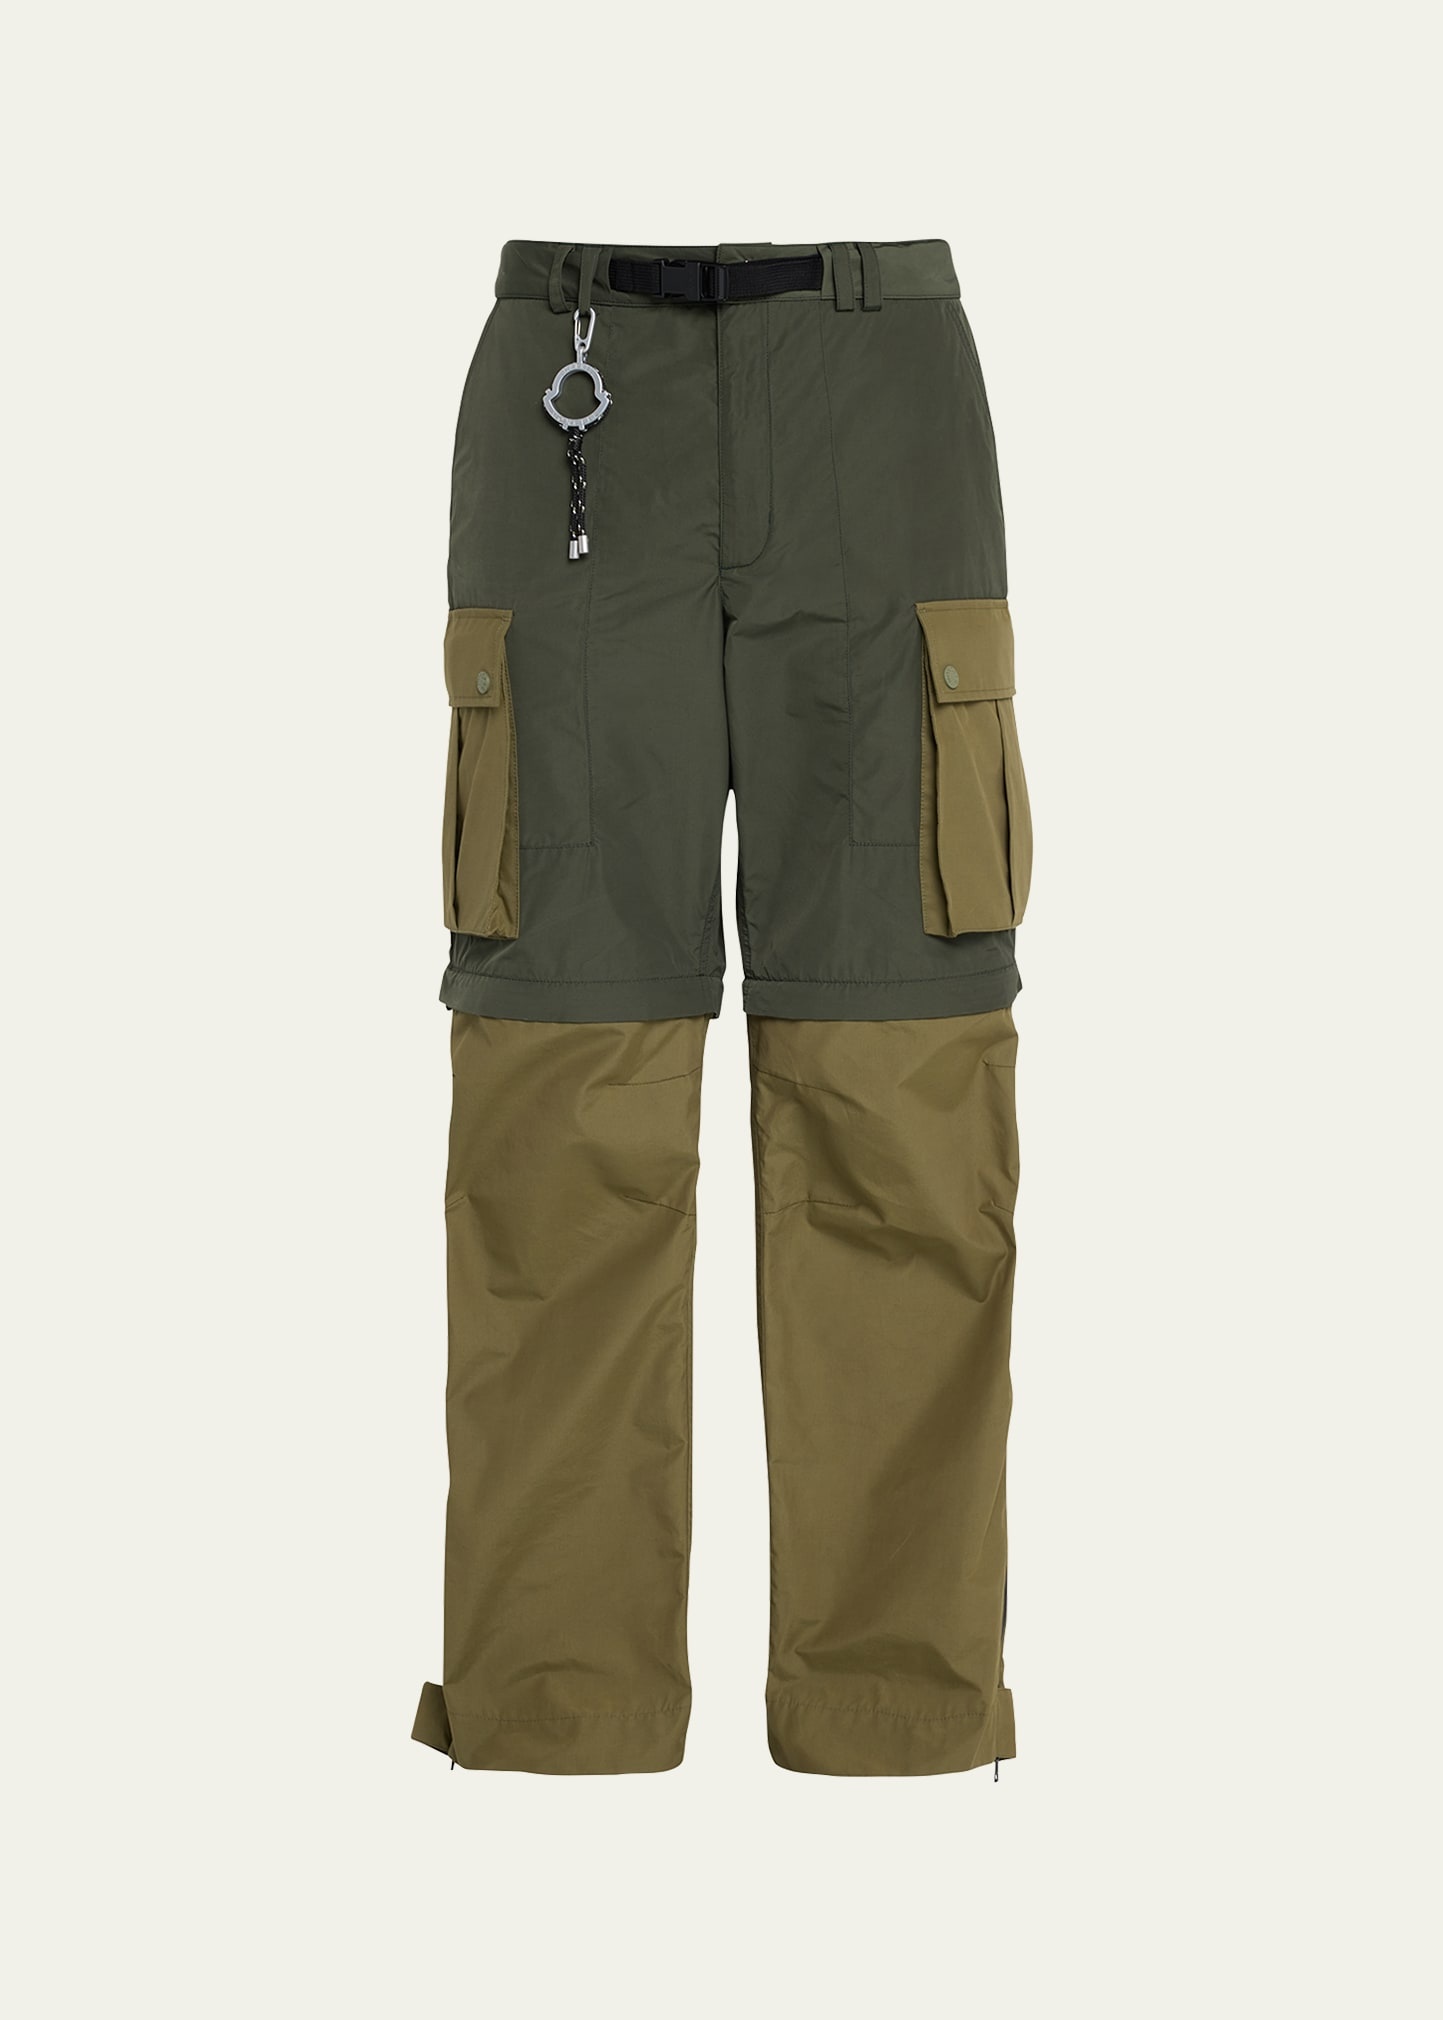 Moncler x Pharrell Williams Men's Zip-Off Colorblock Cargo Pants - 1